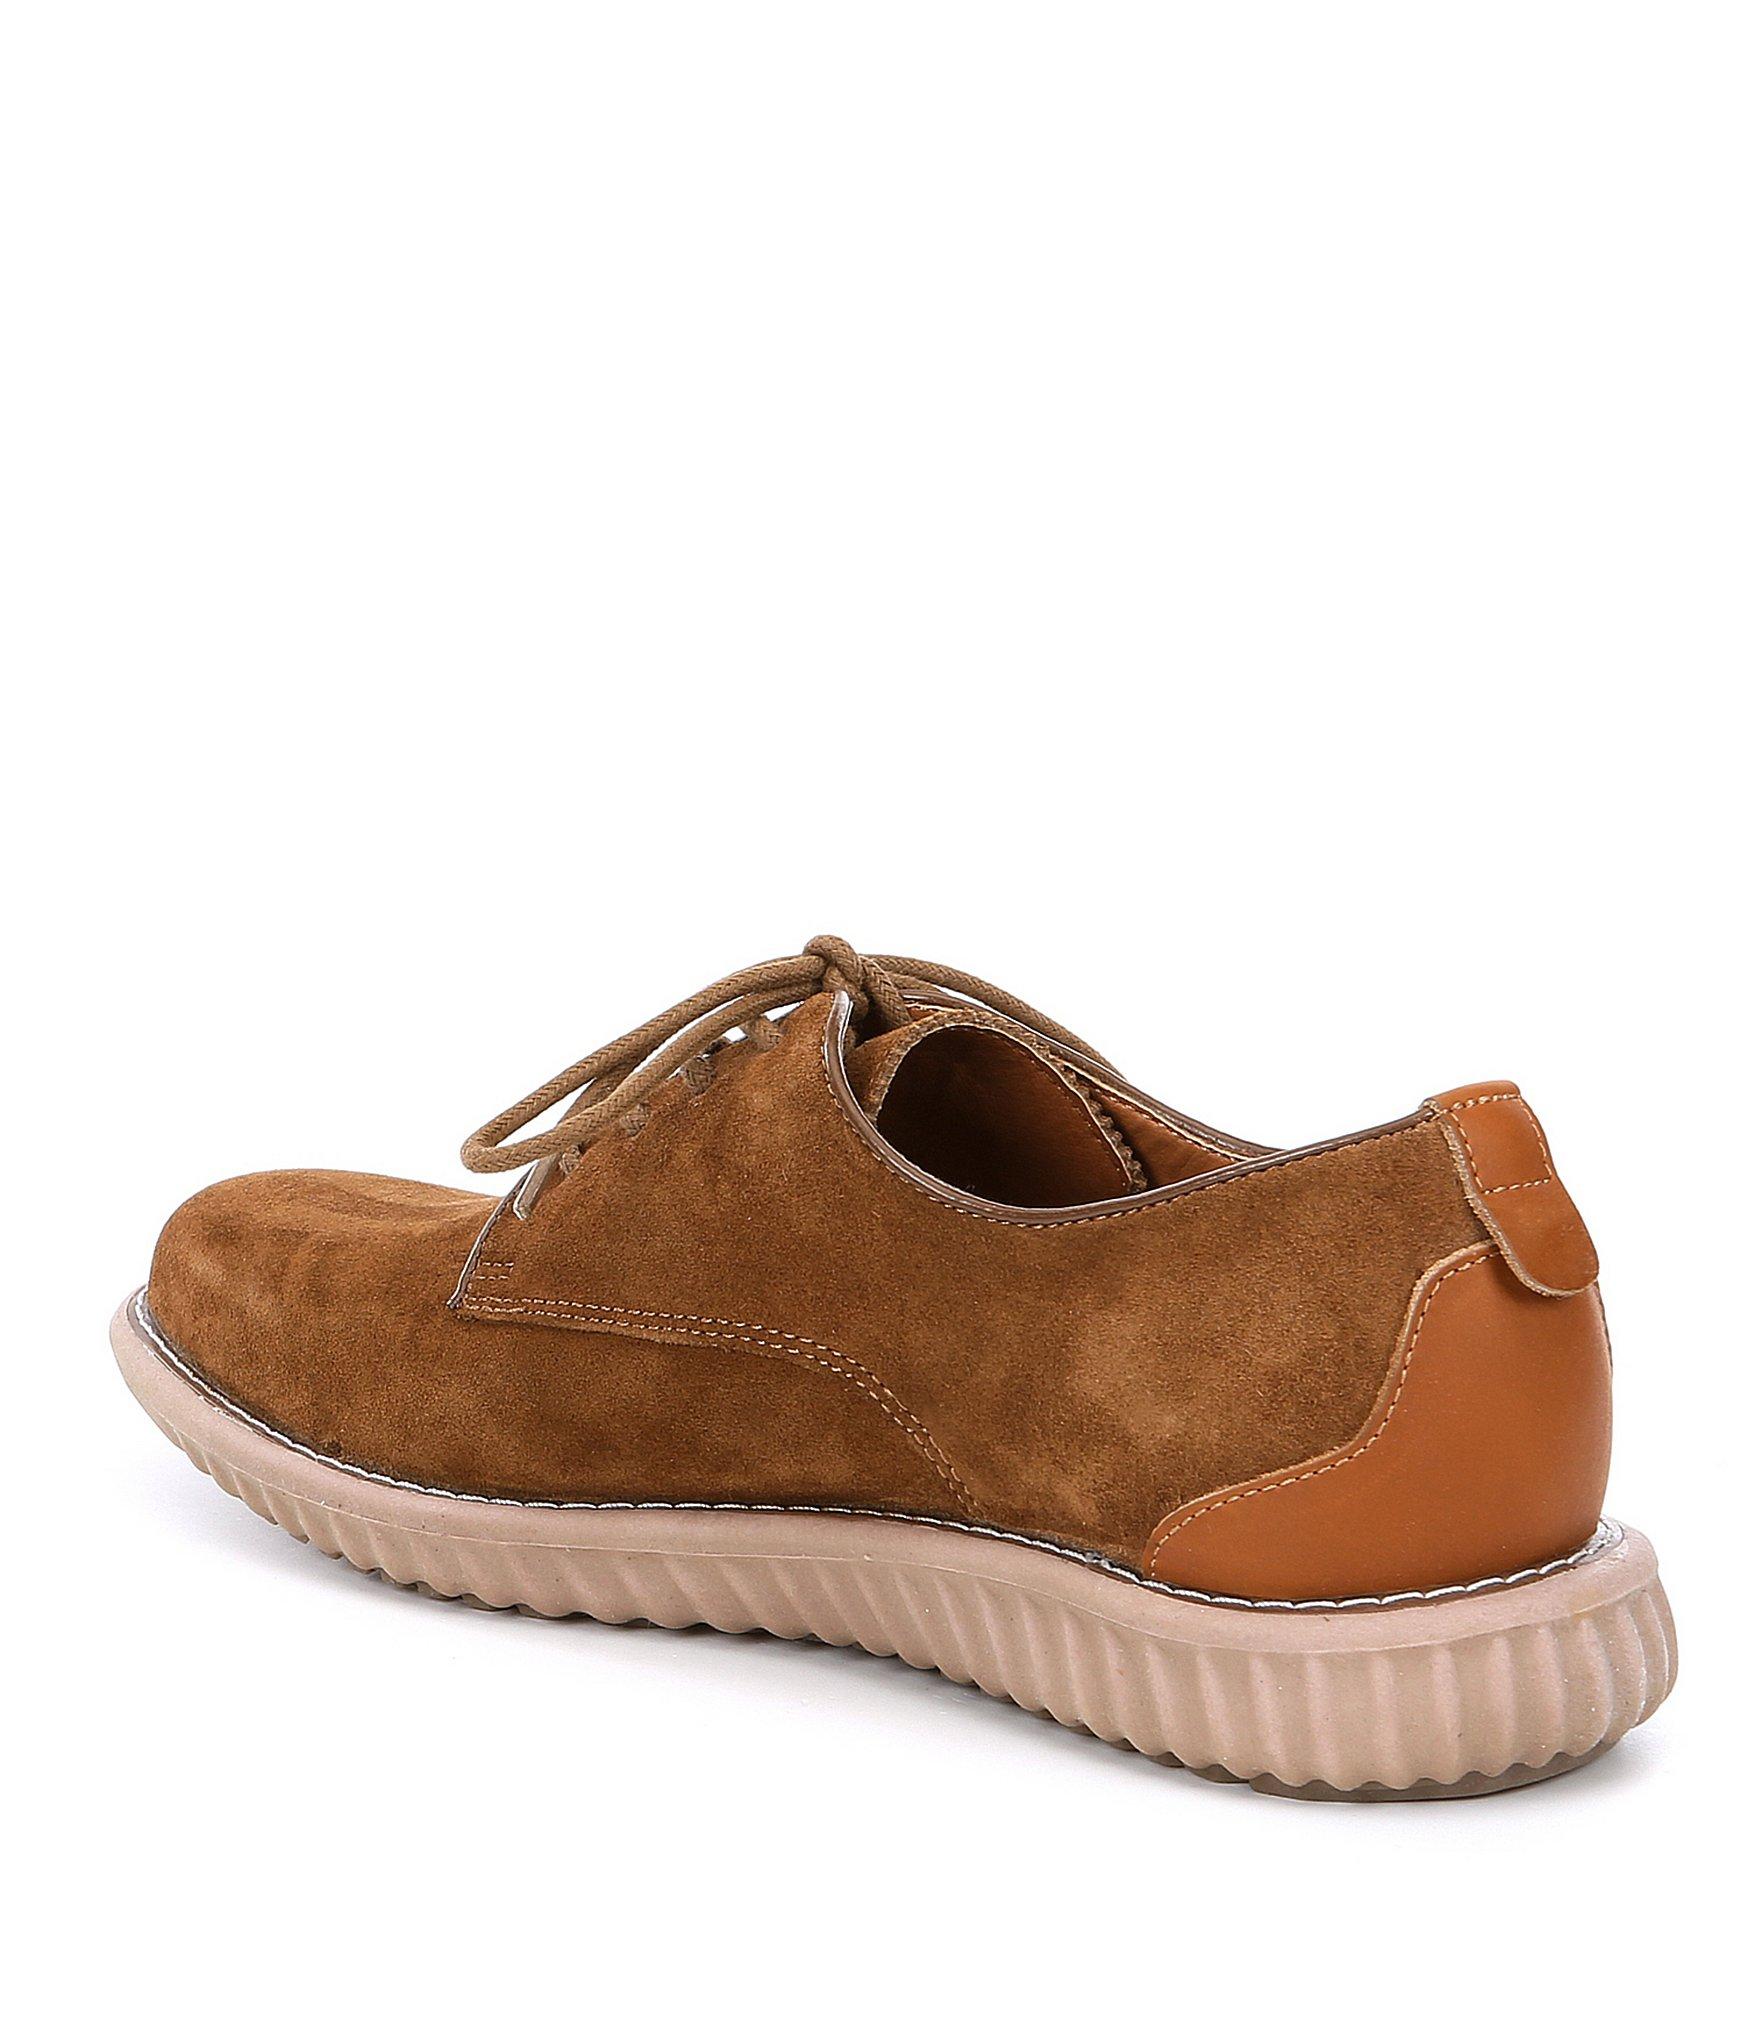 Steve Madden Men's Varek Suede Shoes in Brown for Men - Lyst